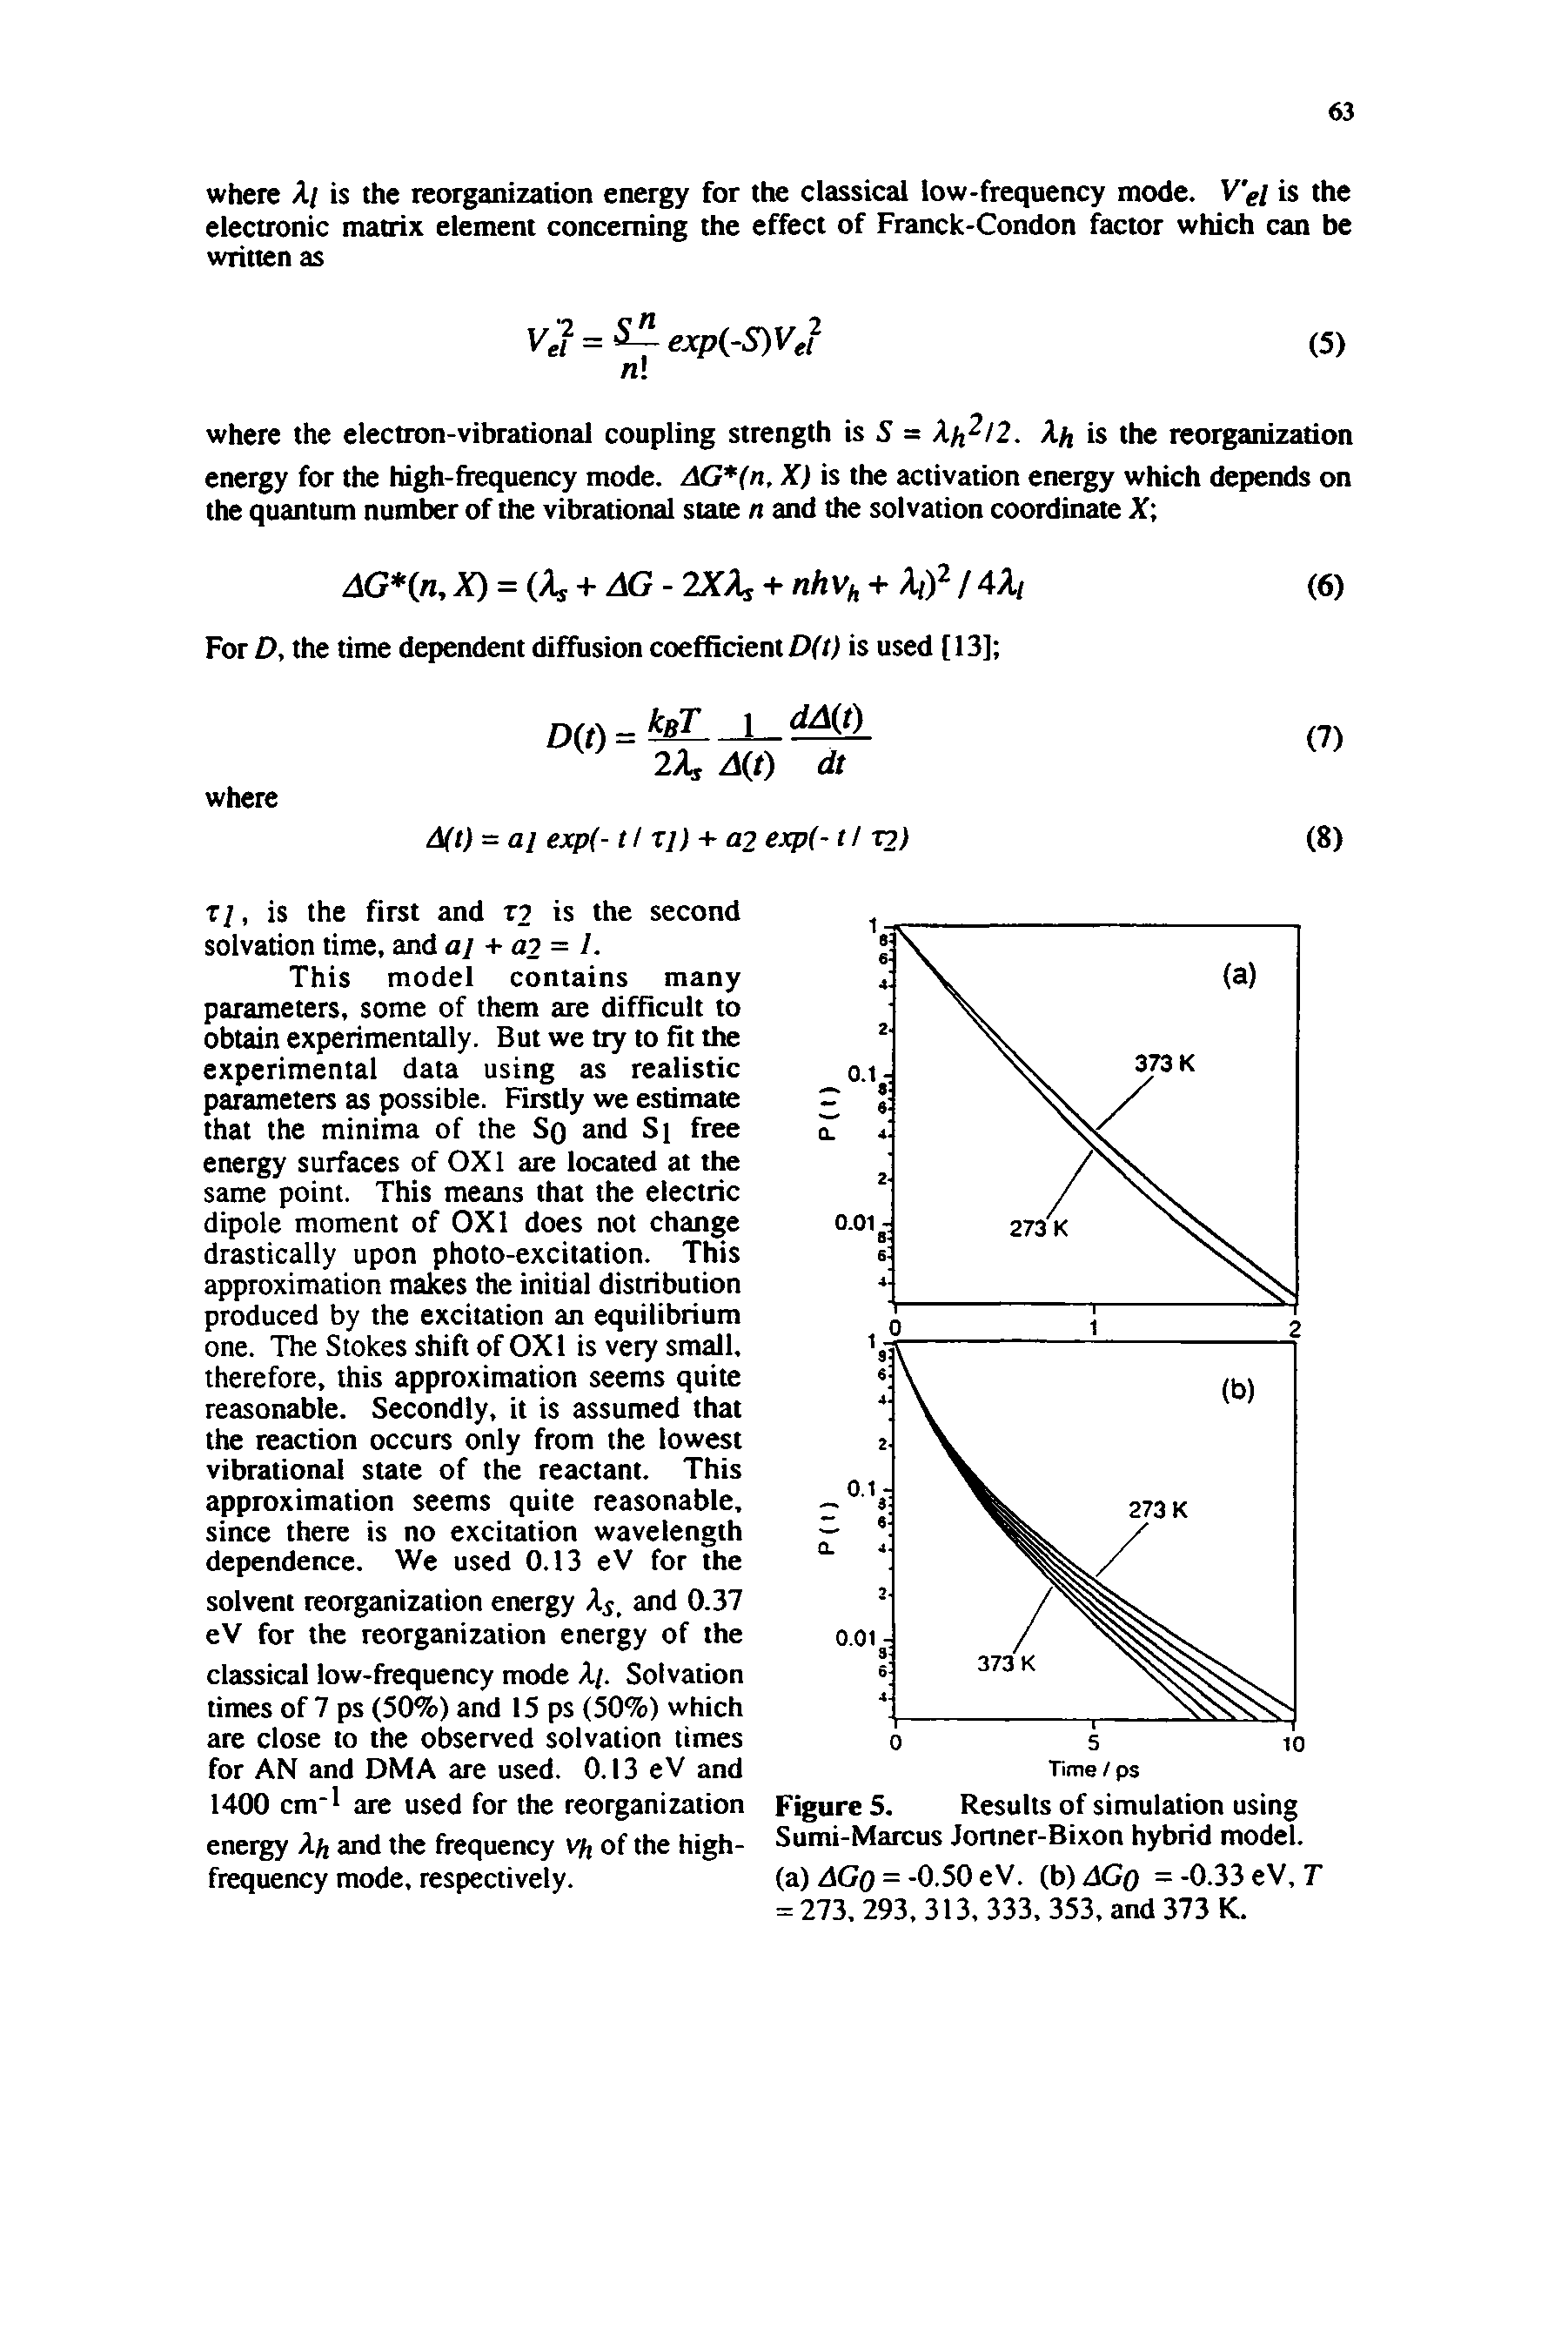 Figure 5. Results of simulation using Sumi-Marcus Jortner-Bixon hybrid model, (a) AGO = -0.50 eV. (b) AGq = -0.33 eV, T = 273. 293. 313, 333, 353, and 373 K.